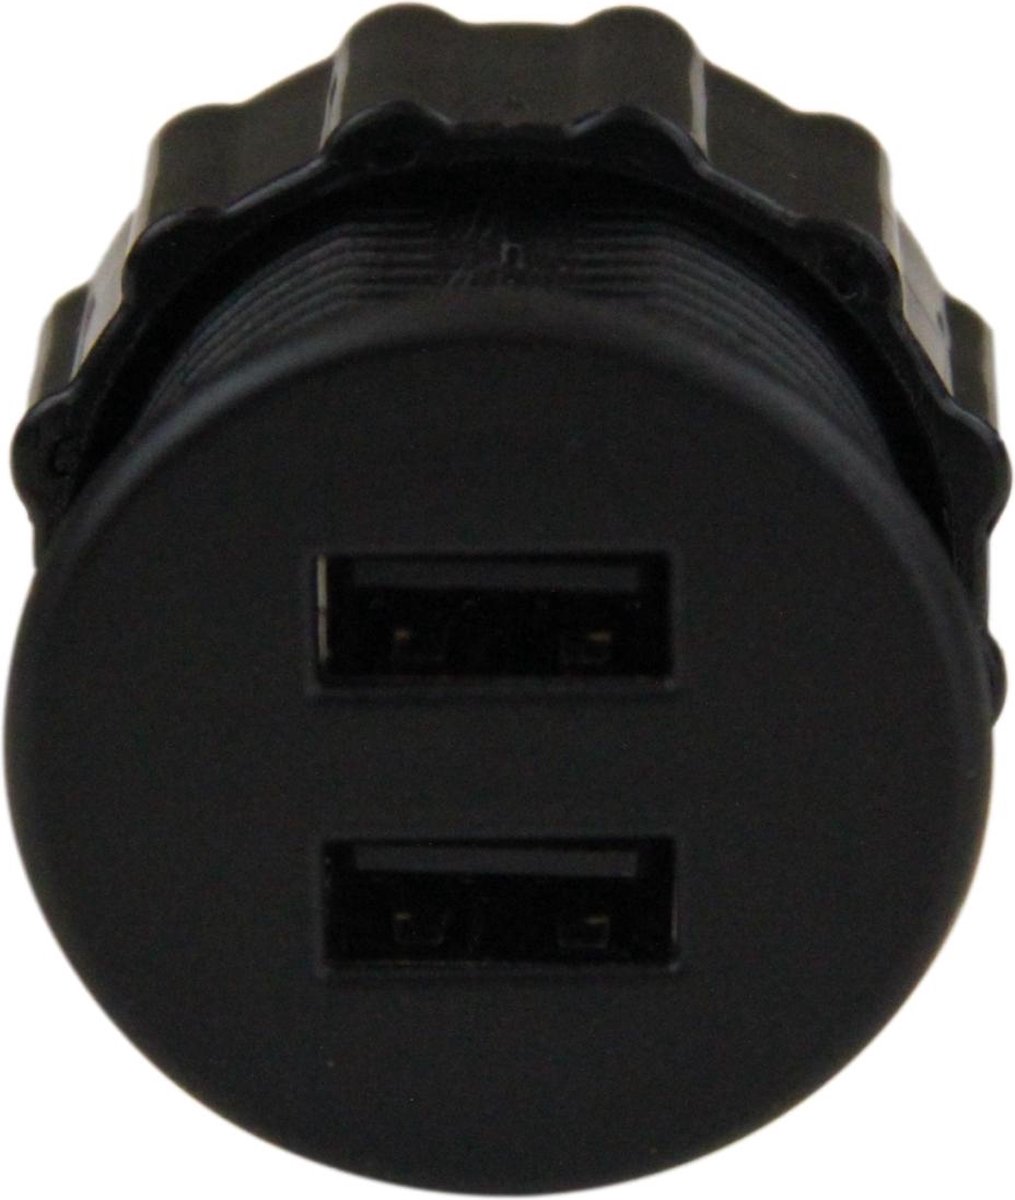 2 poorts USB-A oplaadpunt - Zwart